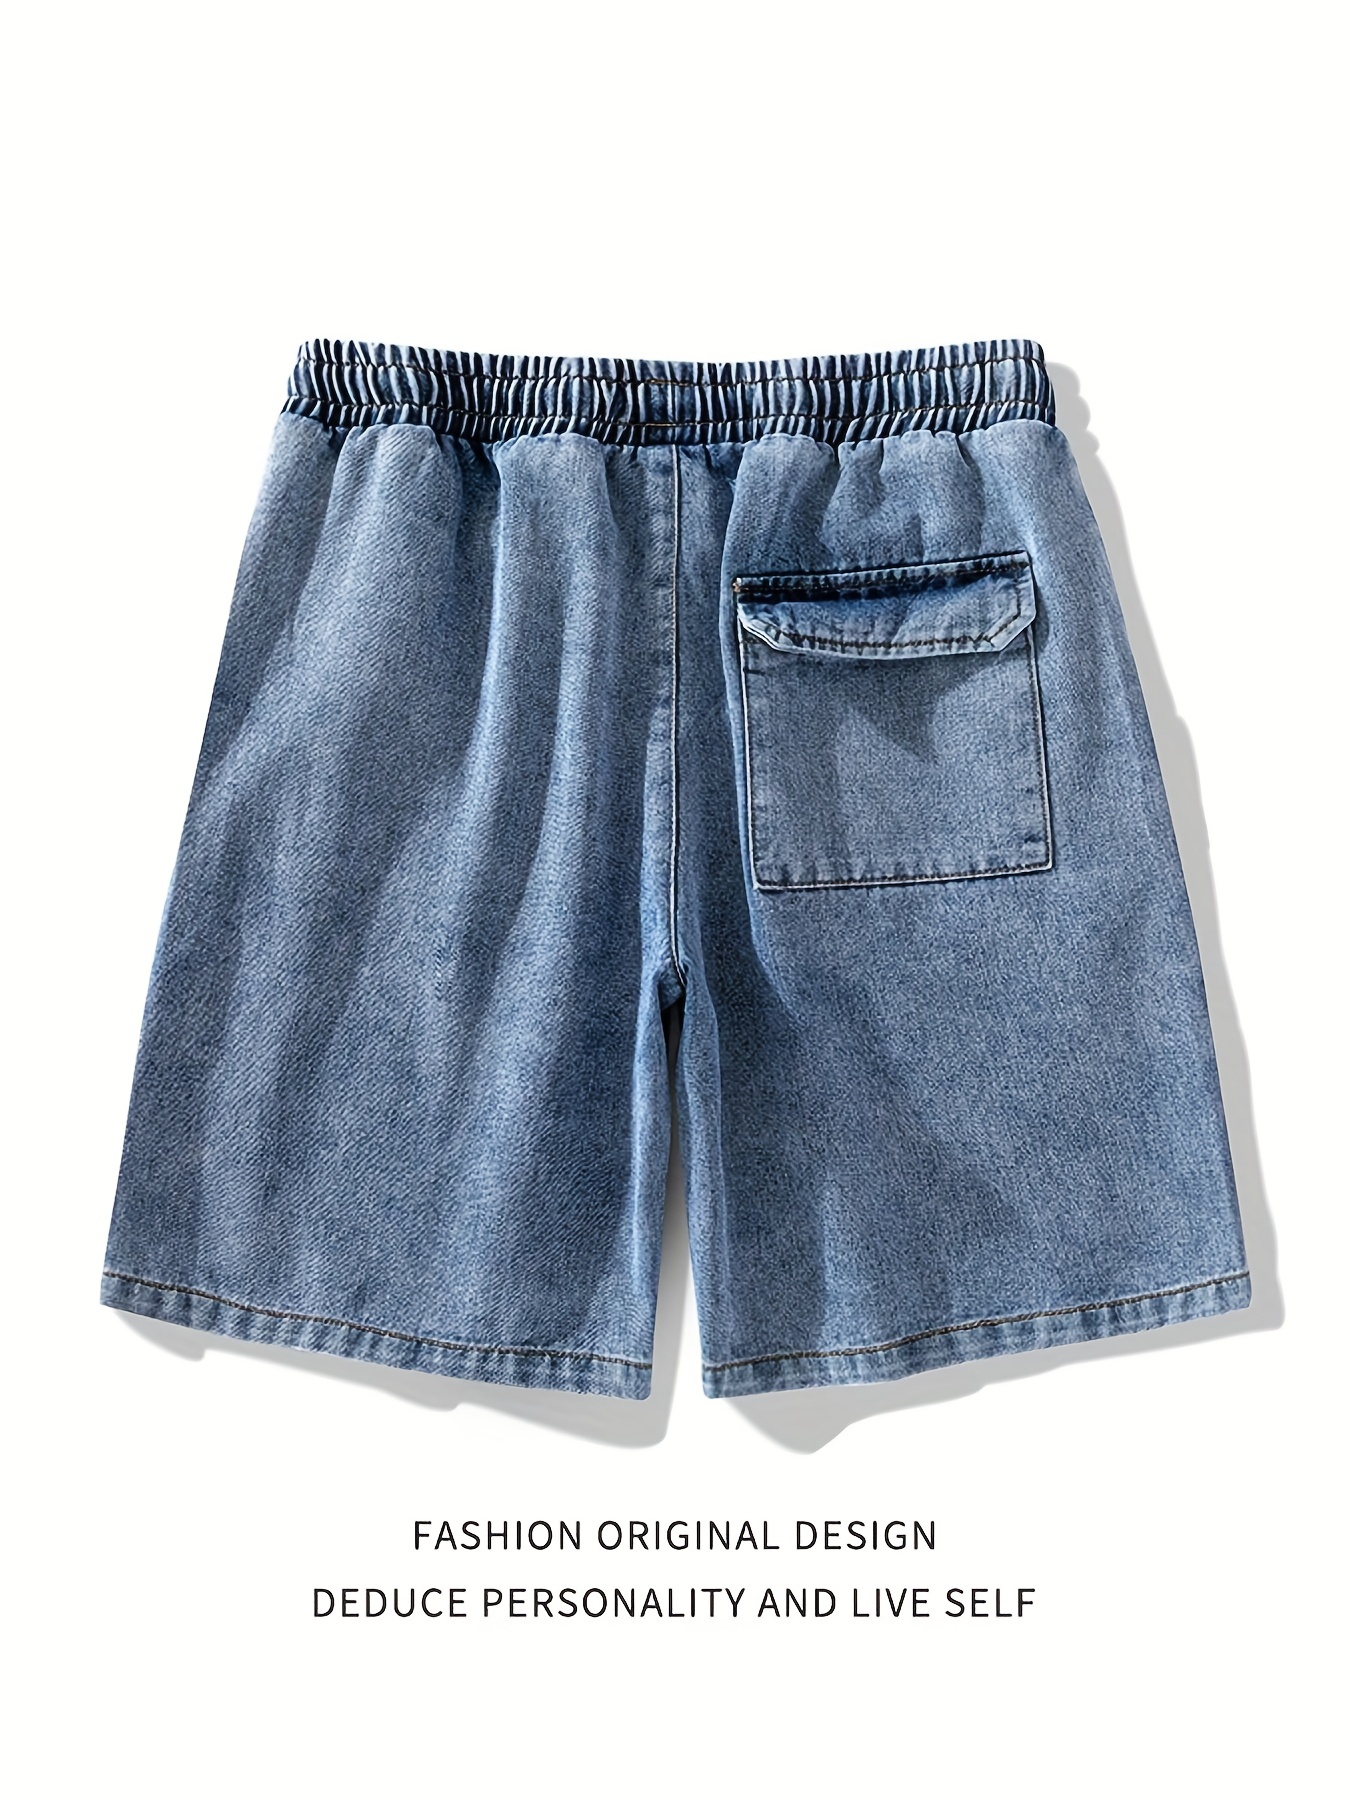 slant pocket denim shorts mens casual street style waist drawstring distressed denim shorts for summer jorts